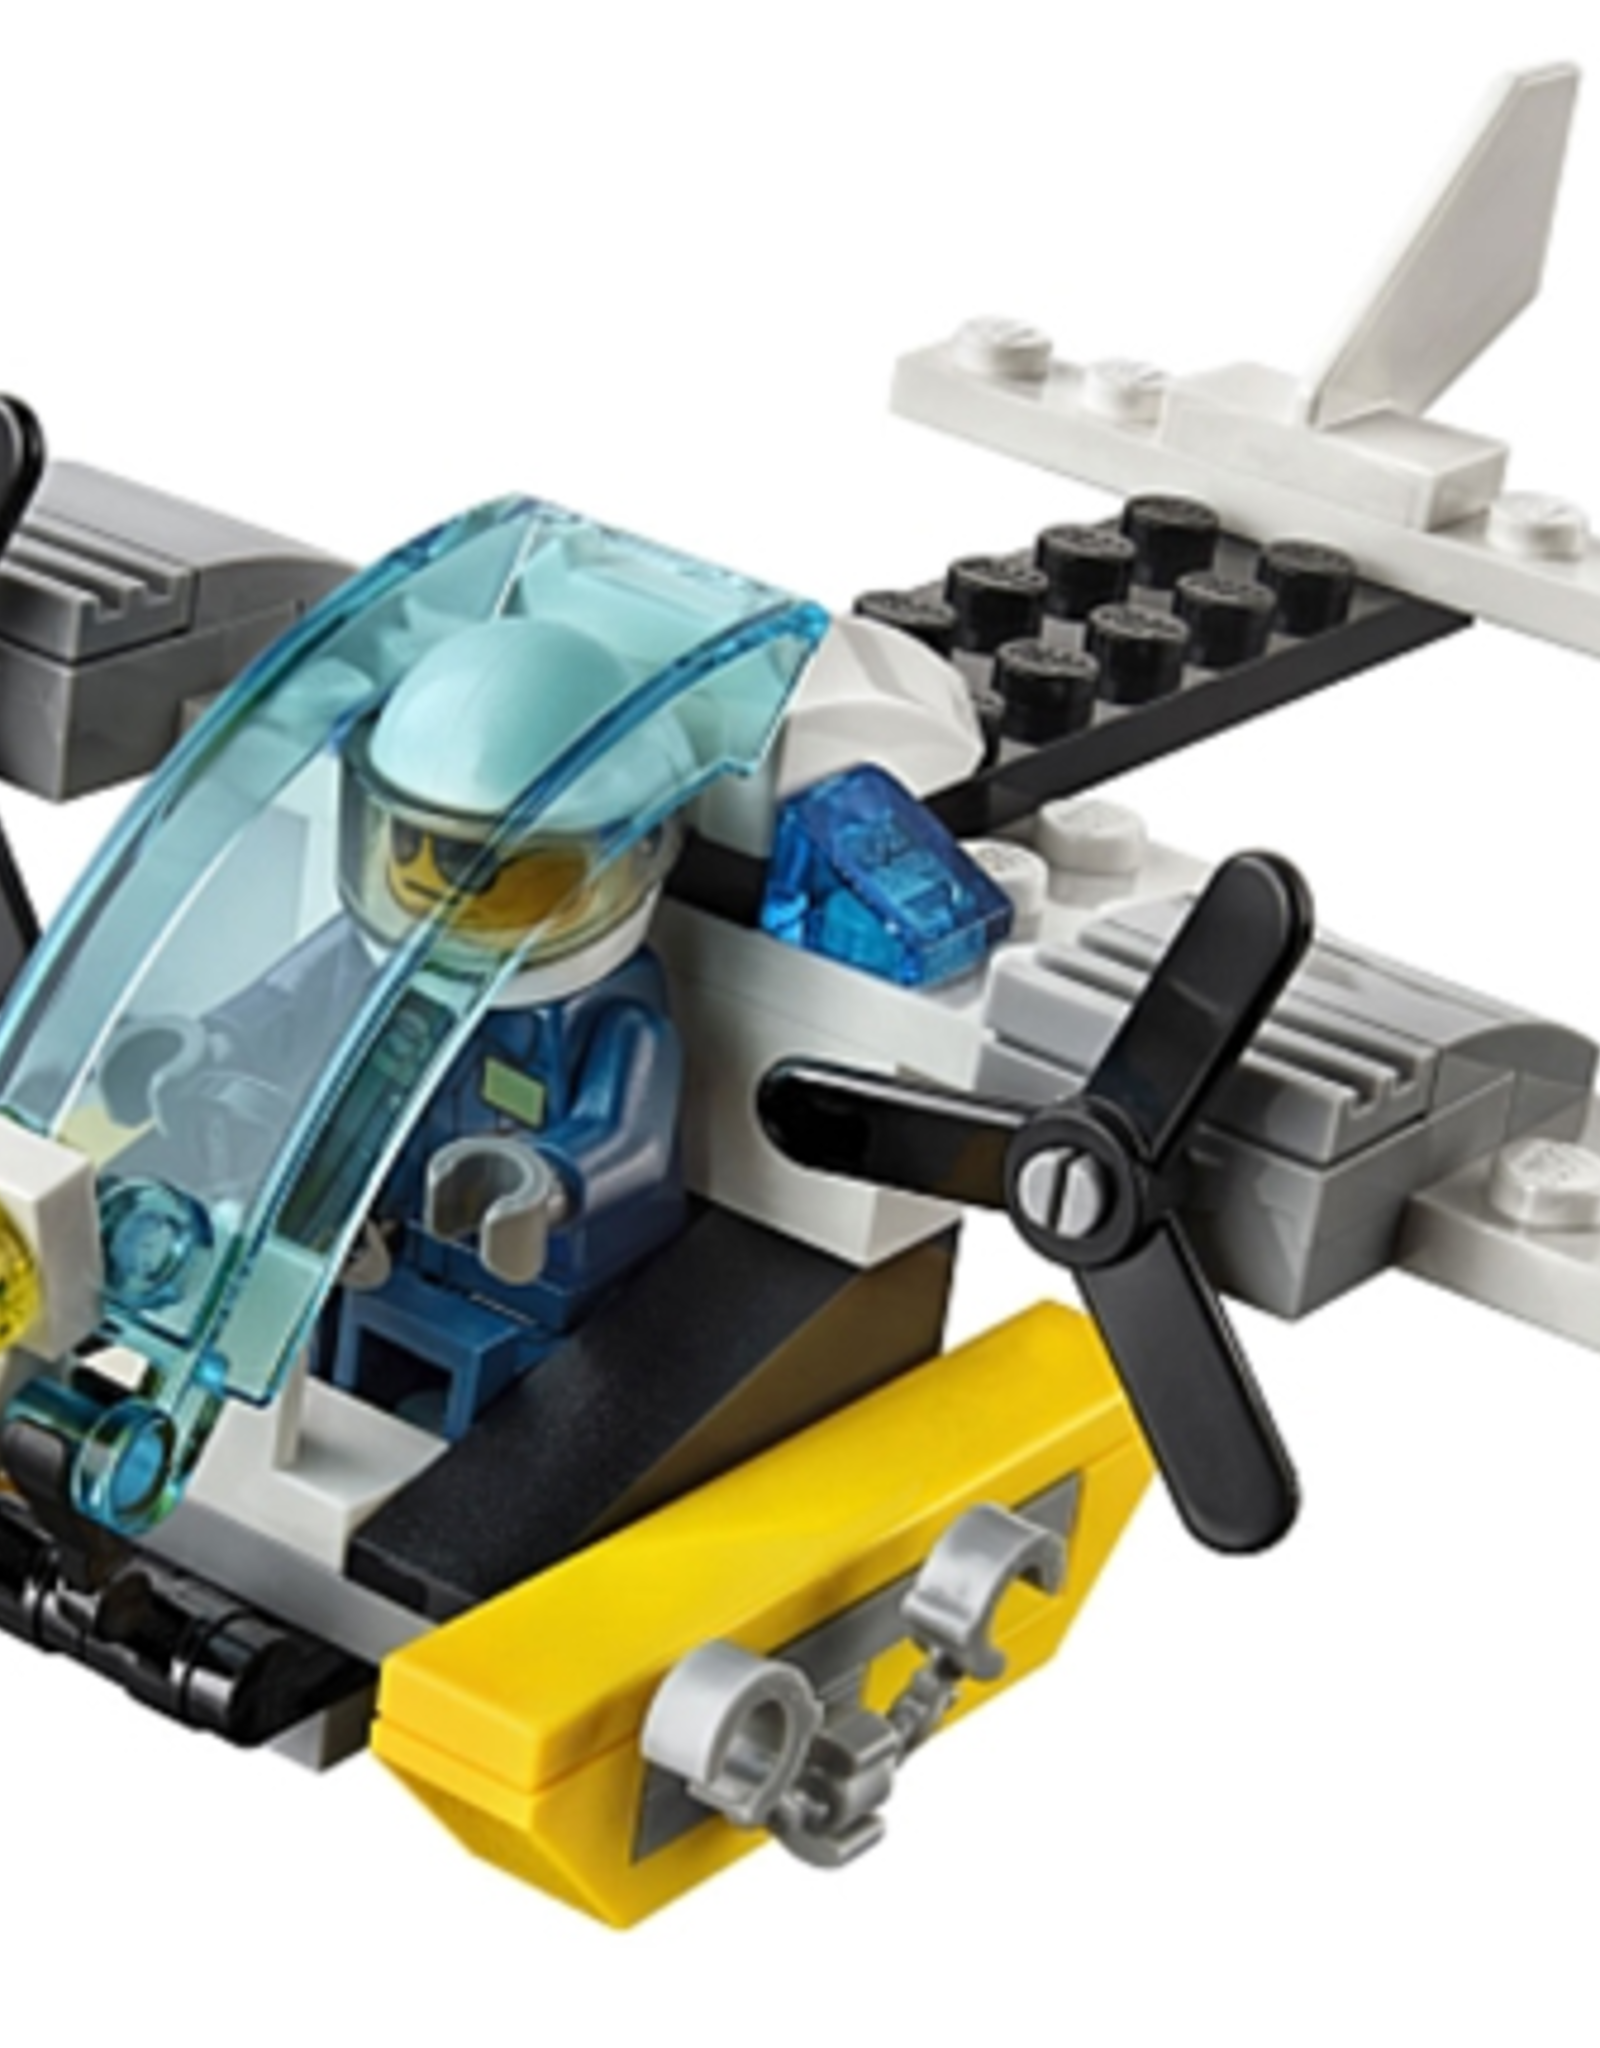 LEGO LEGO 30346 Prison Island Helicopter CITY